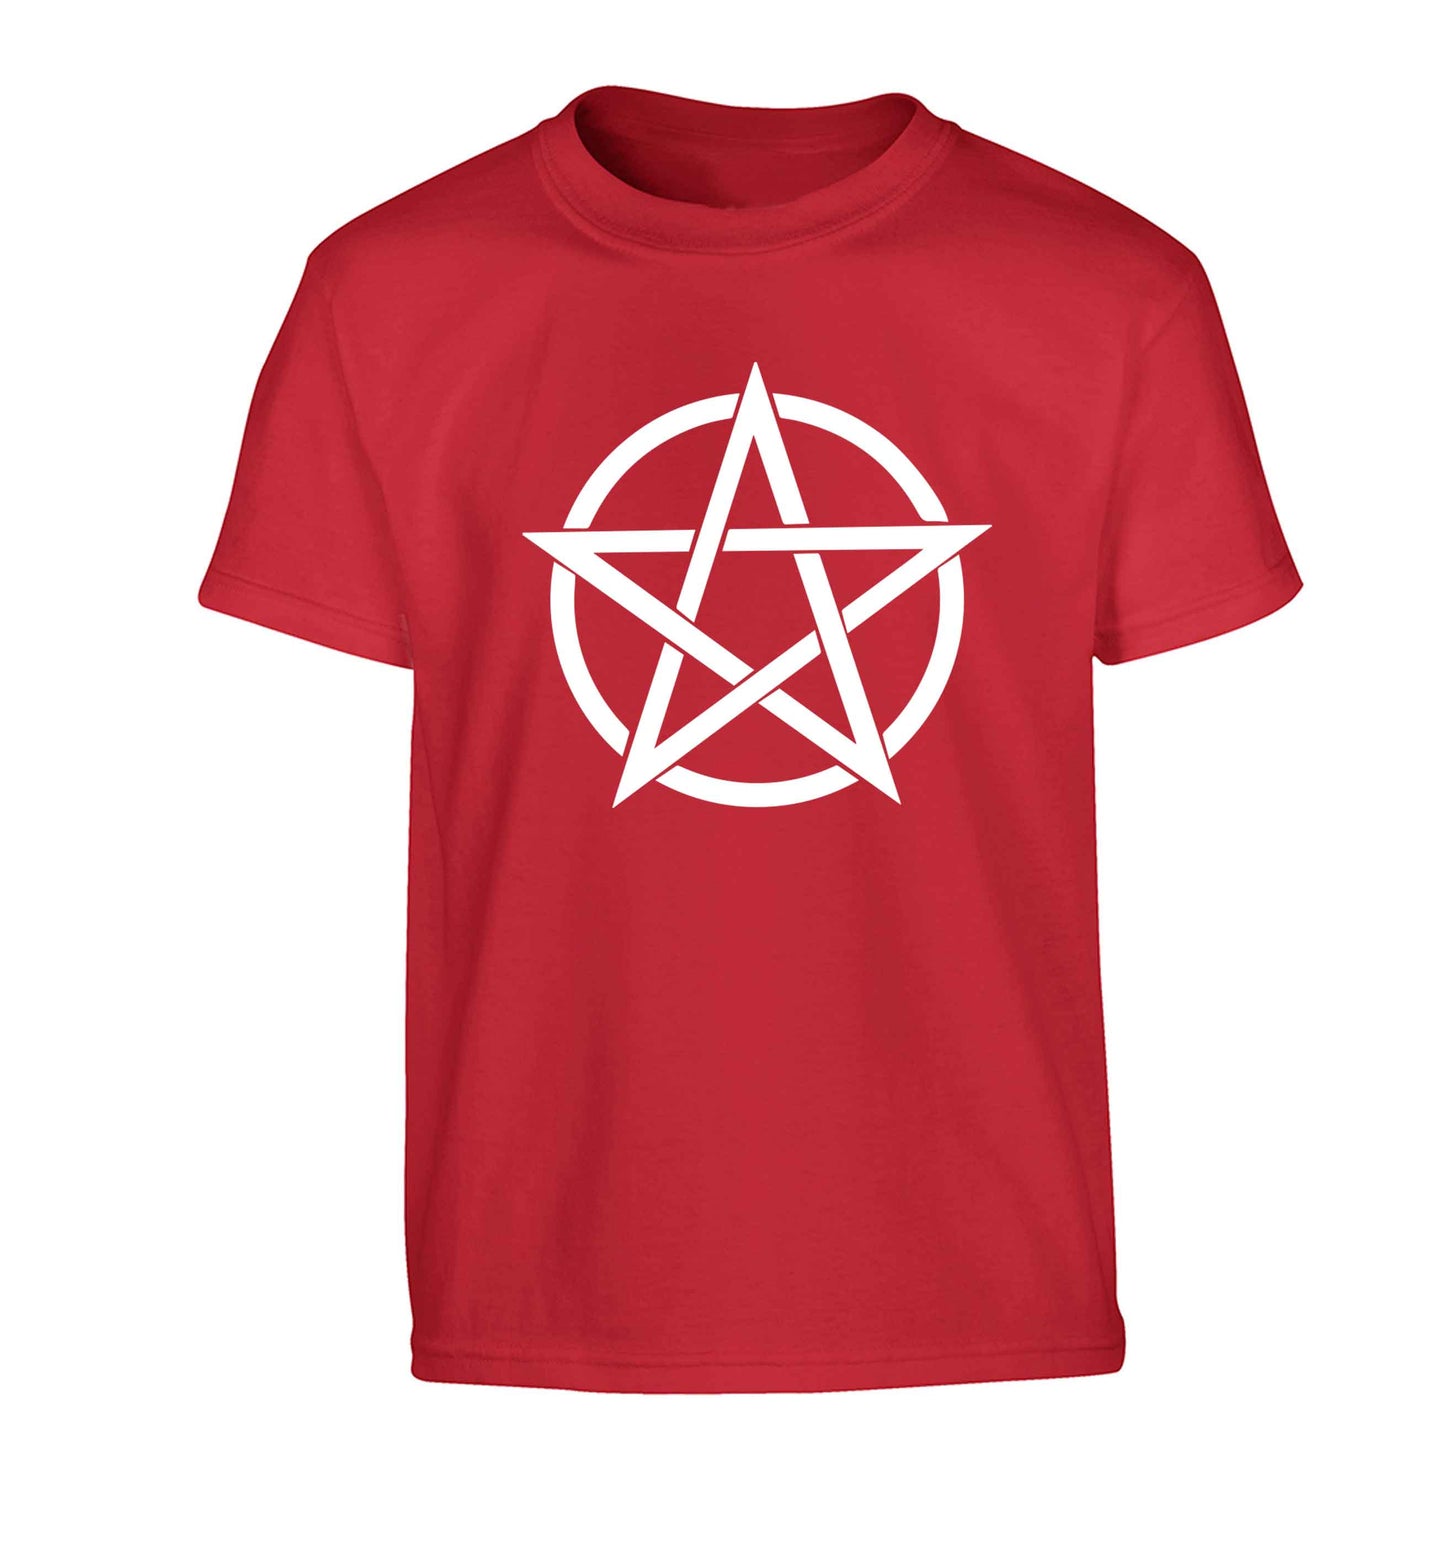 Pentagram symbol Children's red Tshirt 12-13 Years